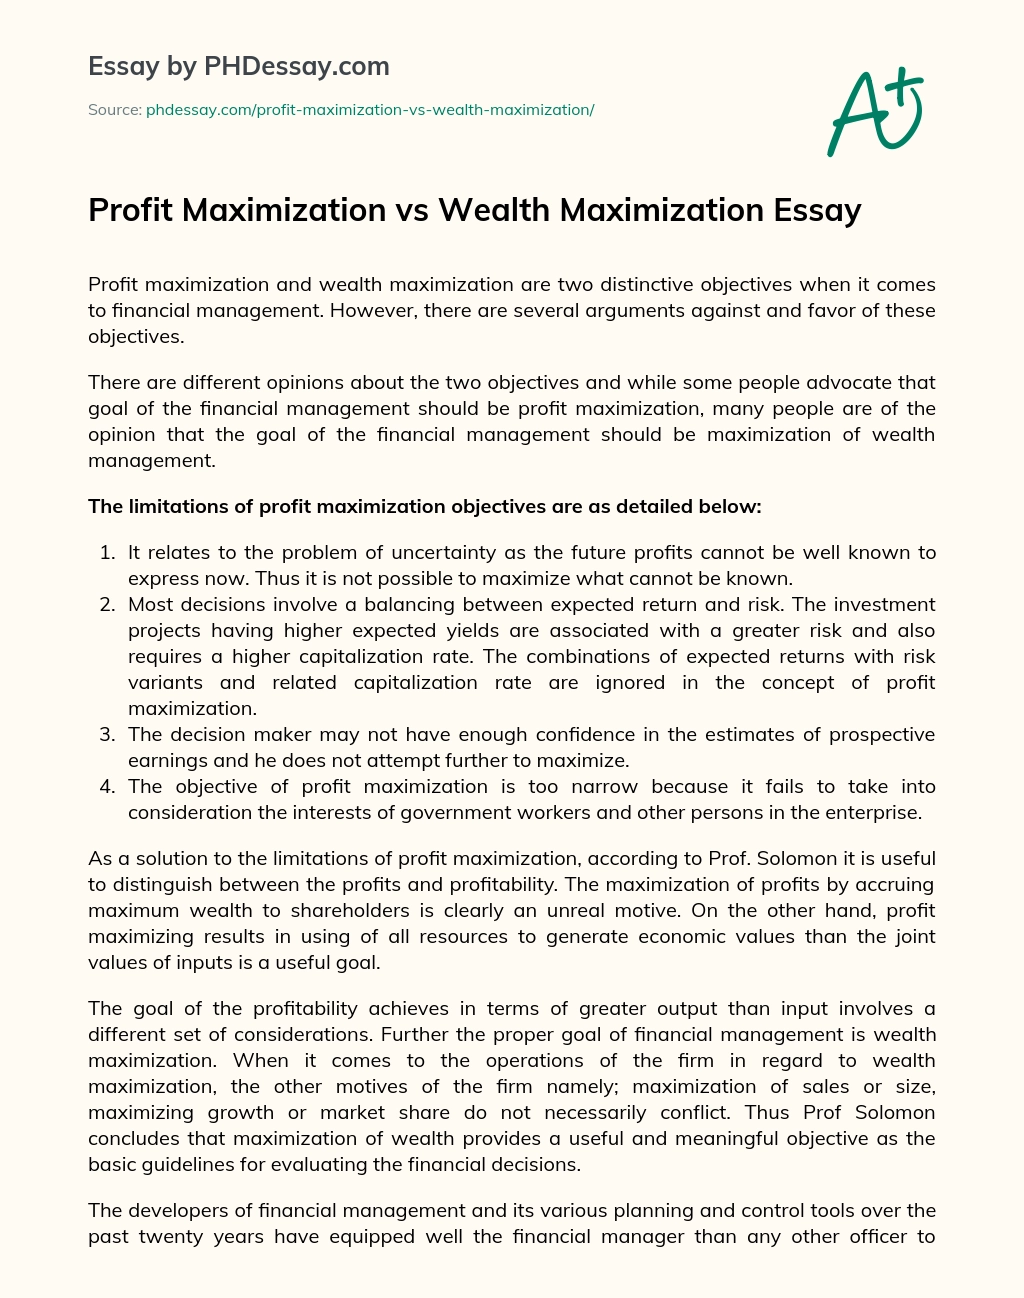 Profit Maximization vs Wealth Maximization Essay essay